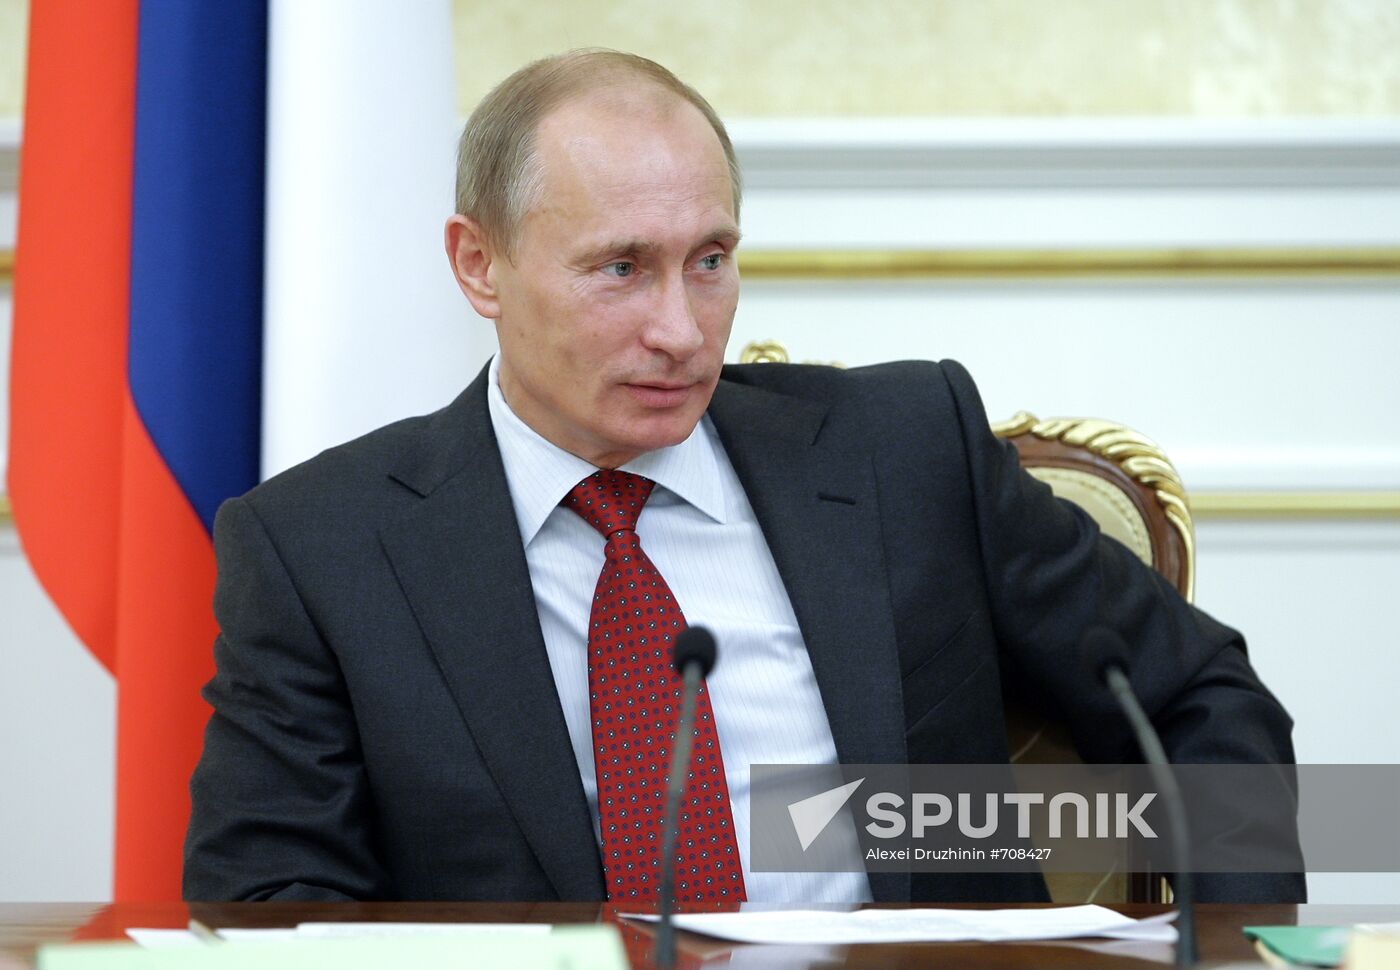 Vladimir Putin chairs meeting of Government Presidium